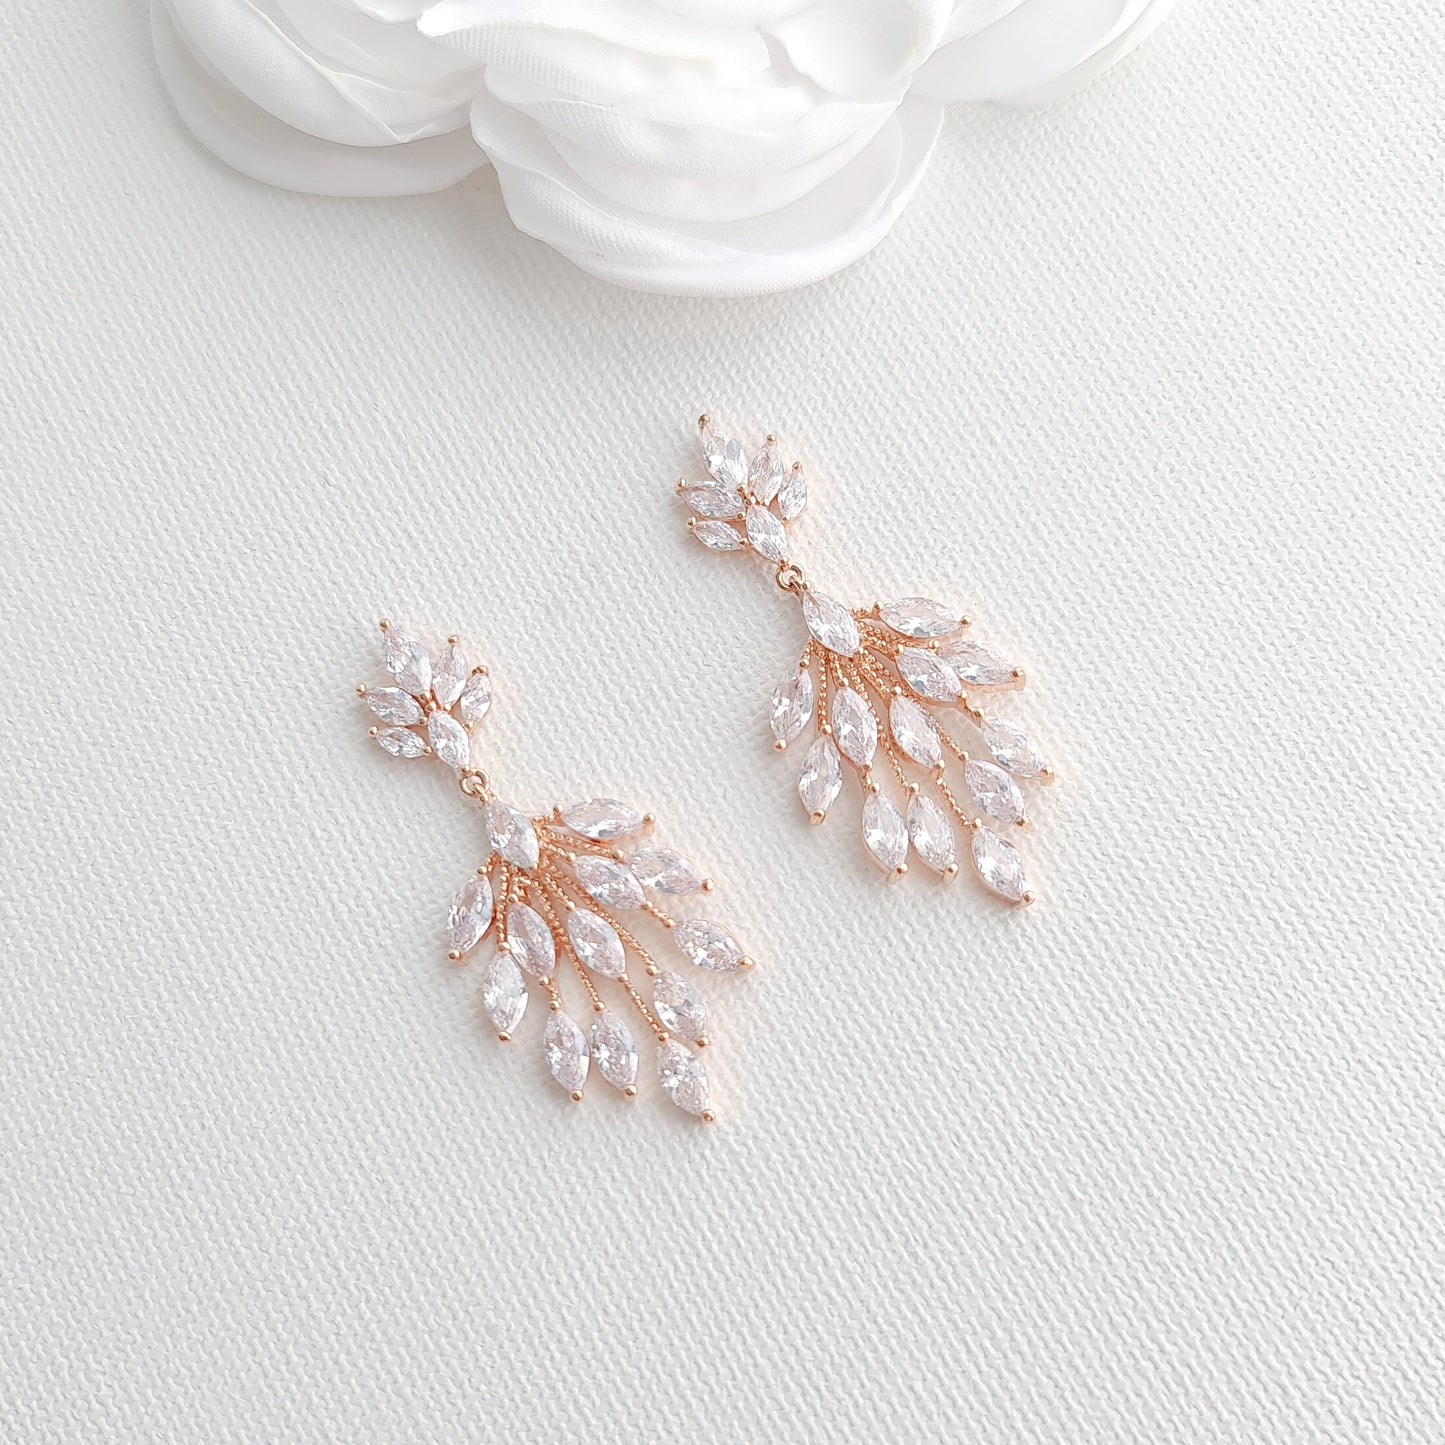 Tiny Leaf Chandelier Earrings in Gold For Brides-Belle